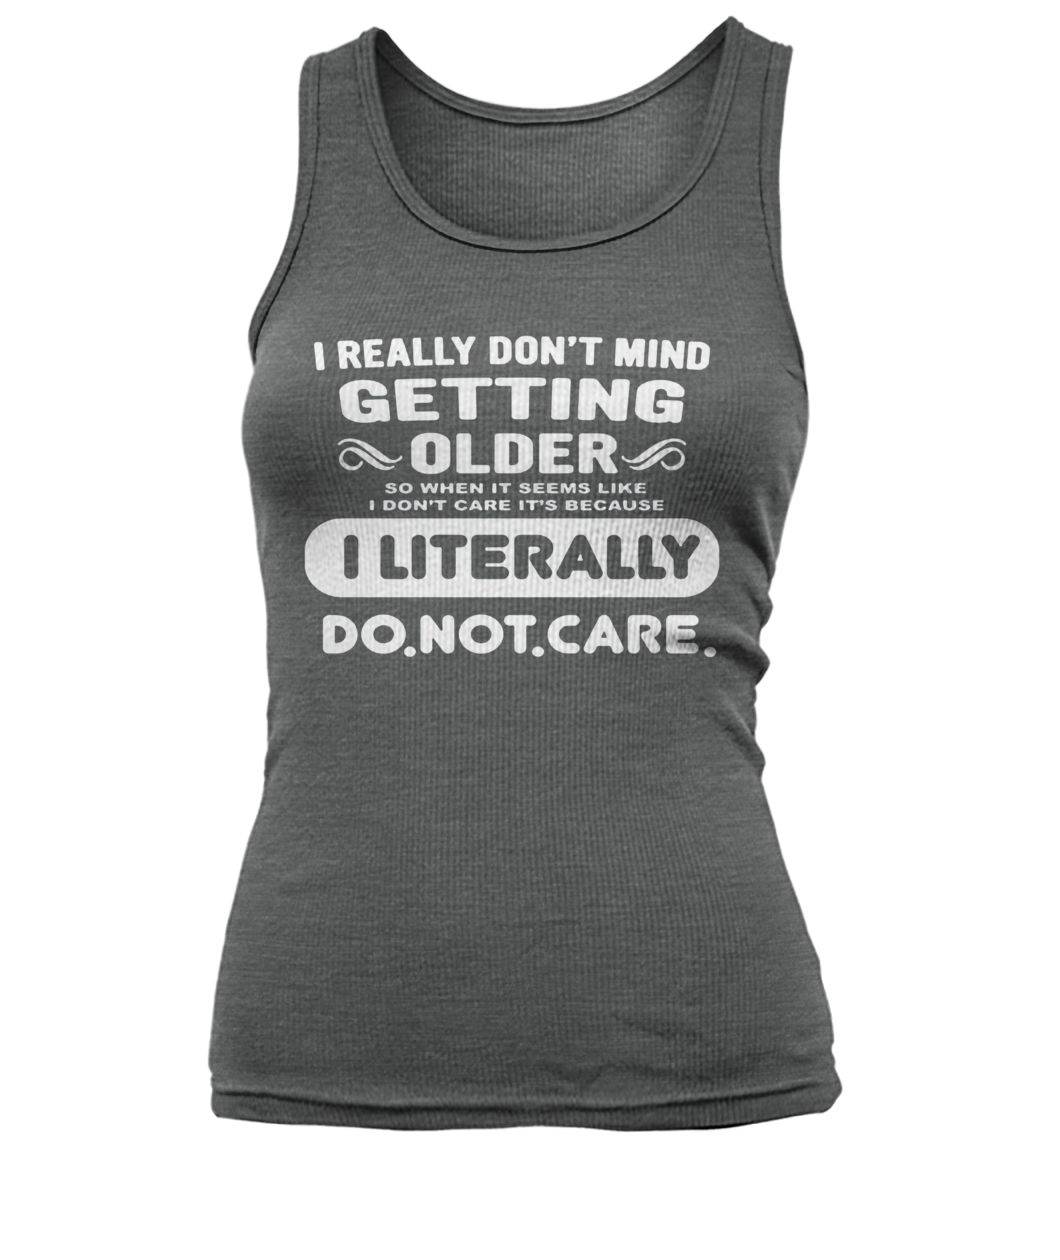 I really don't mind getting older so when it seems like women's tank top